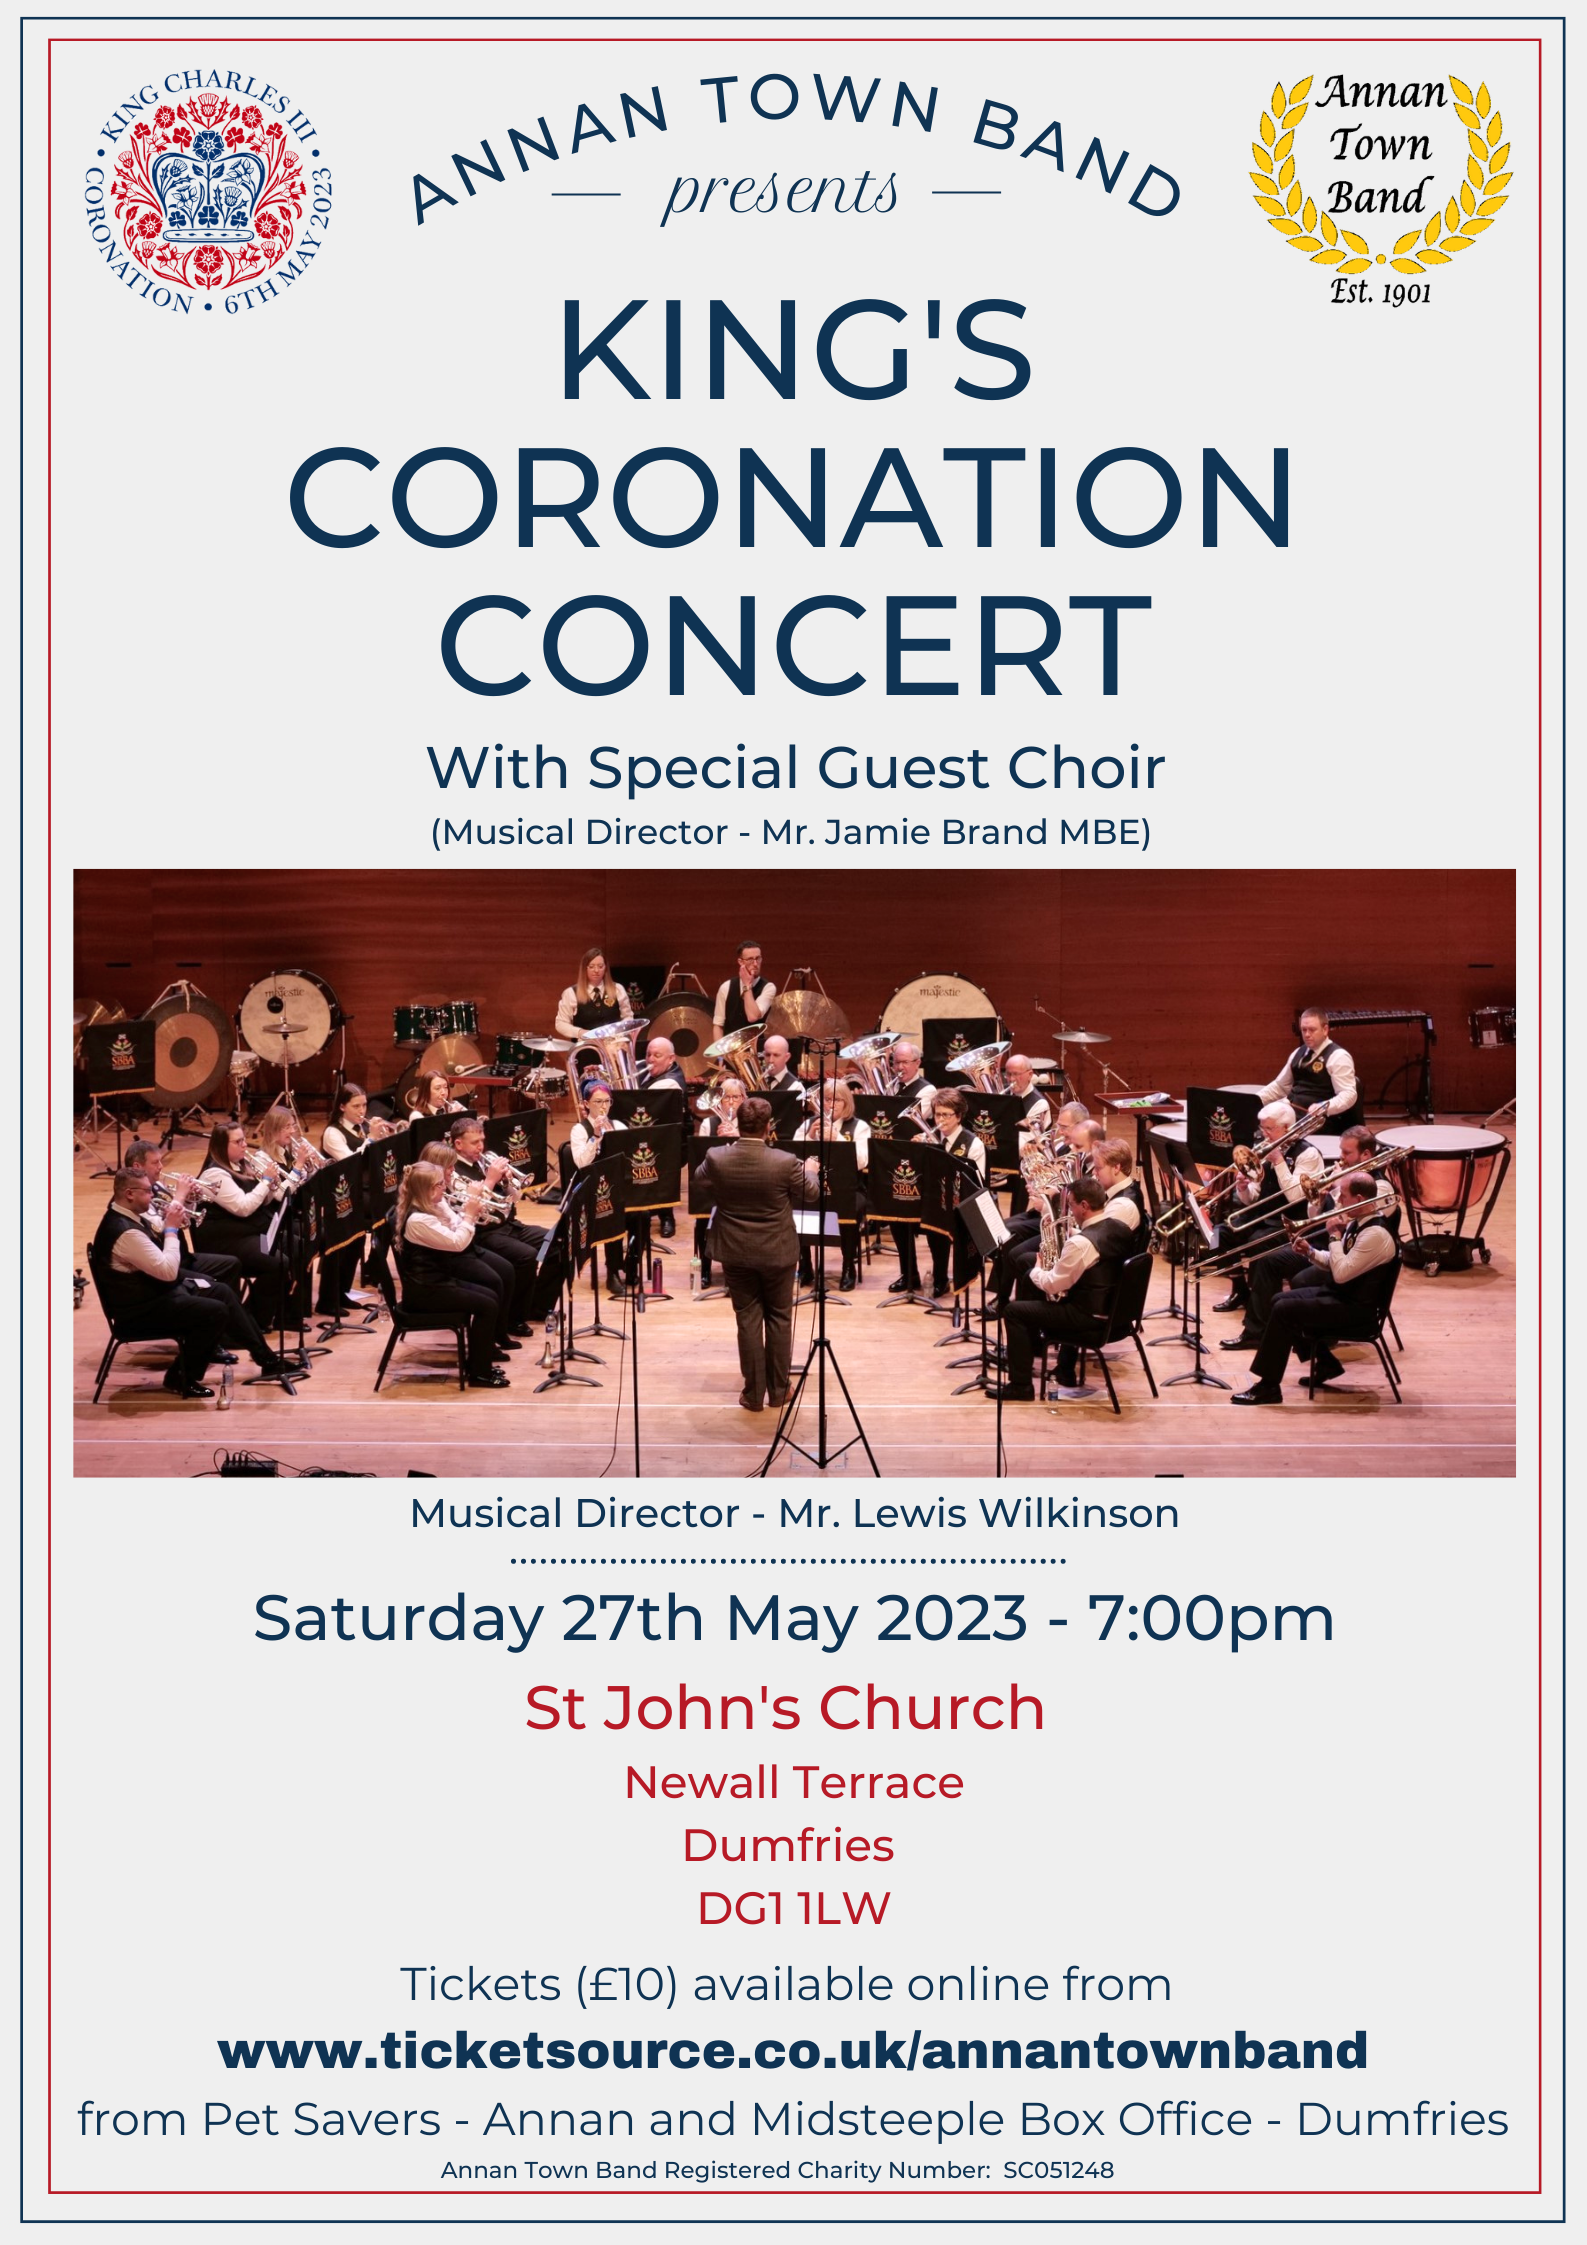 Annan Town Band presents King's Coronation Concert on Saturday 27th May at 7pm in St John's Church